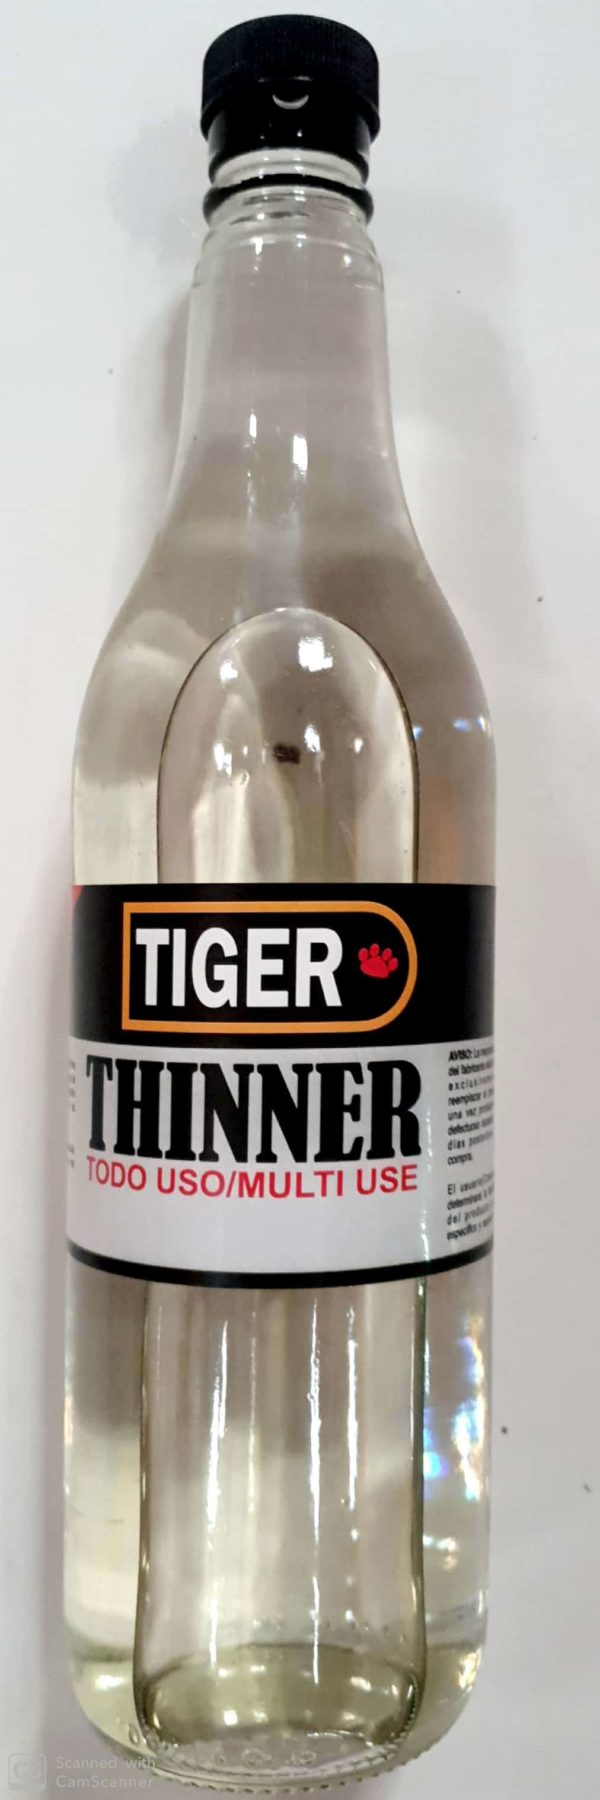 THINNER TIGER  ½ BOTELLA .